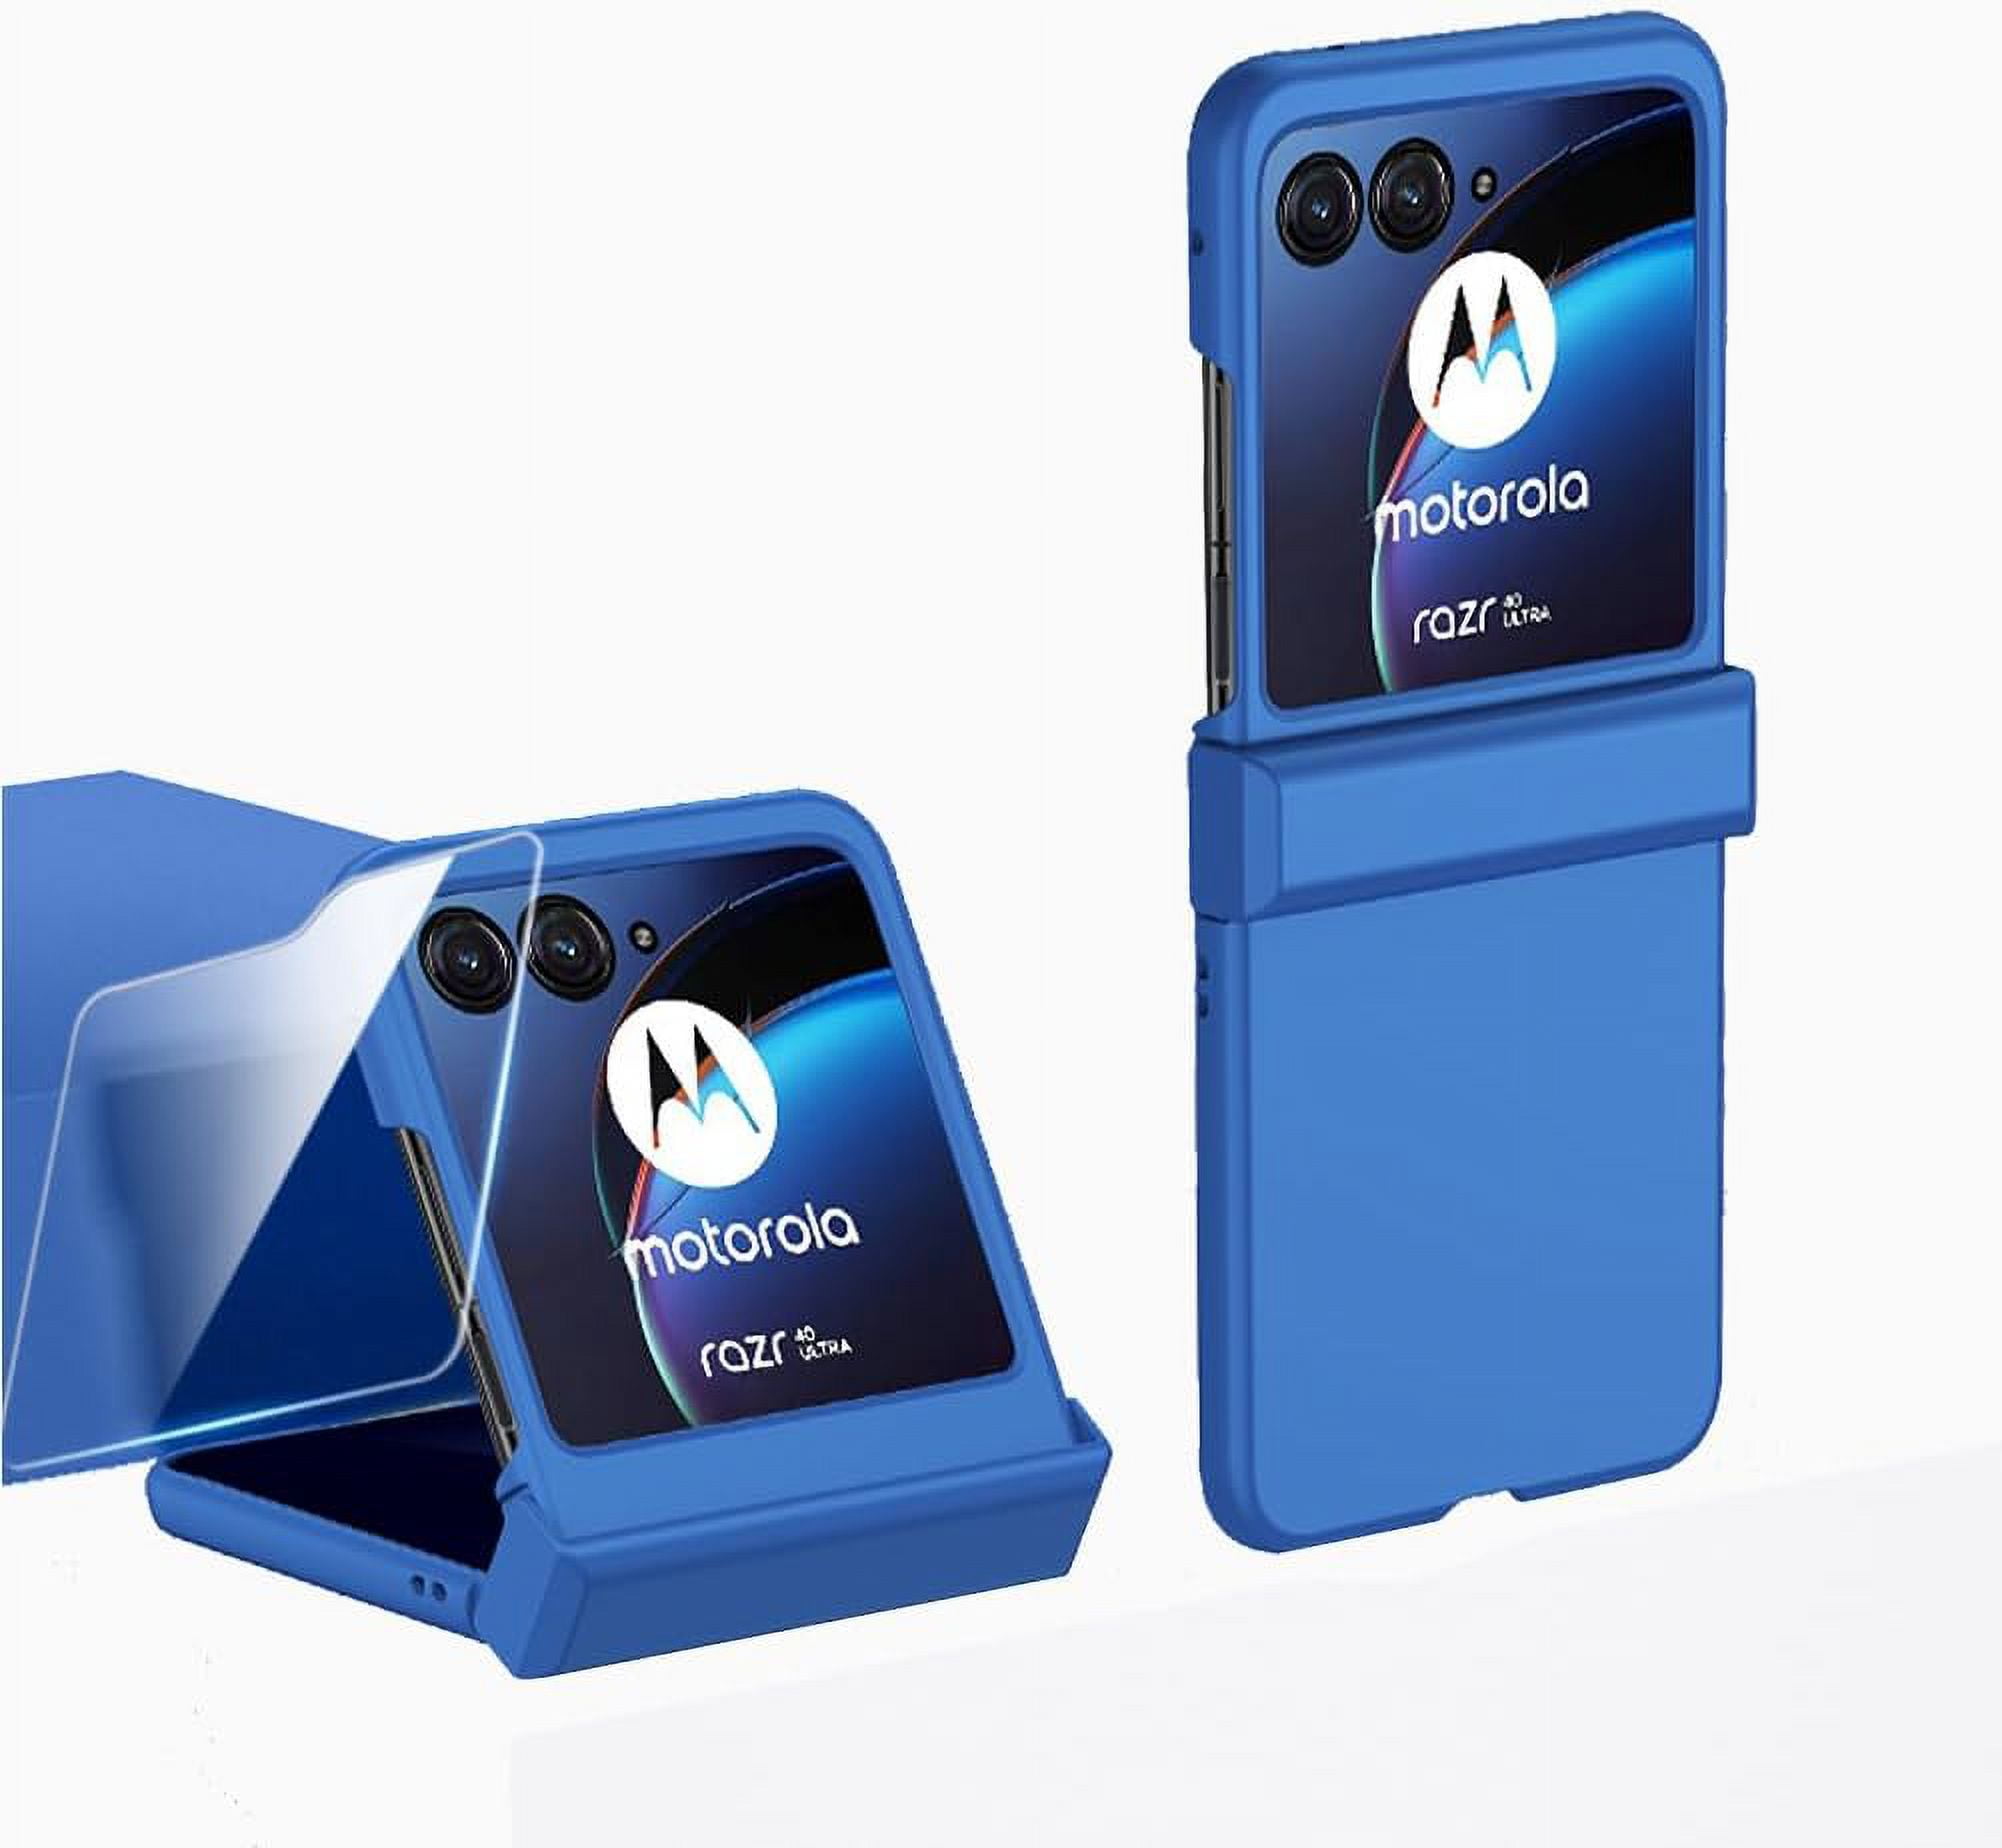  Counlisha Silicone case for Motorola MA1 Wireless